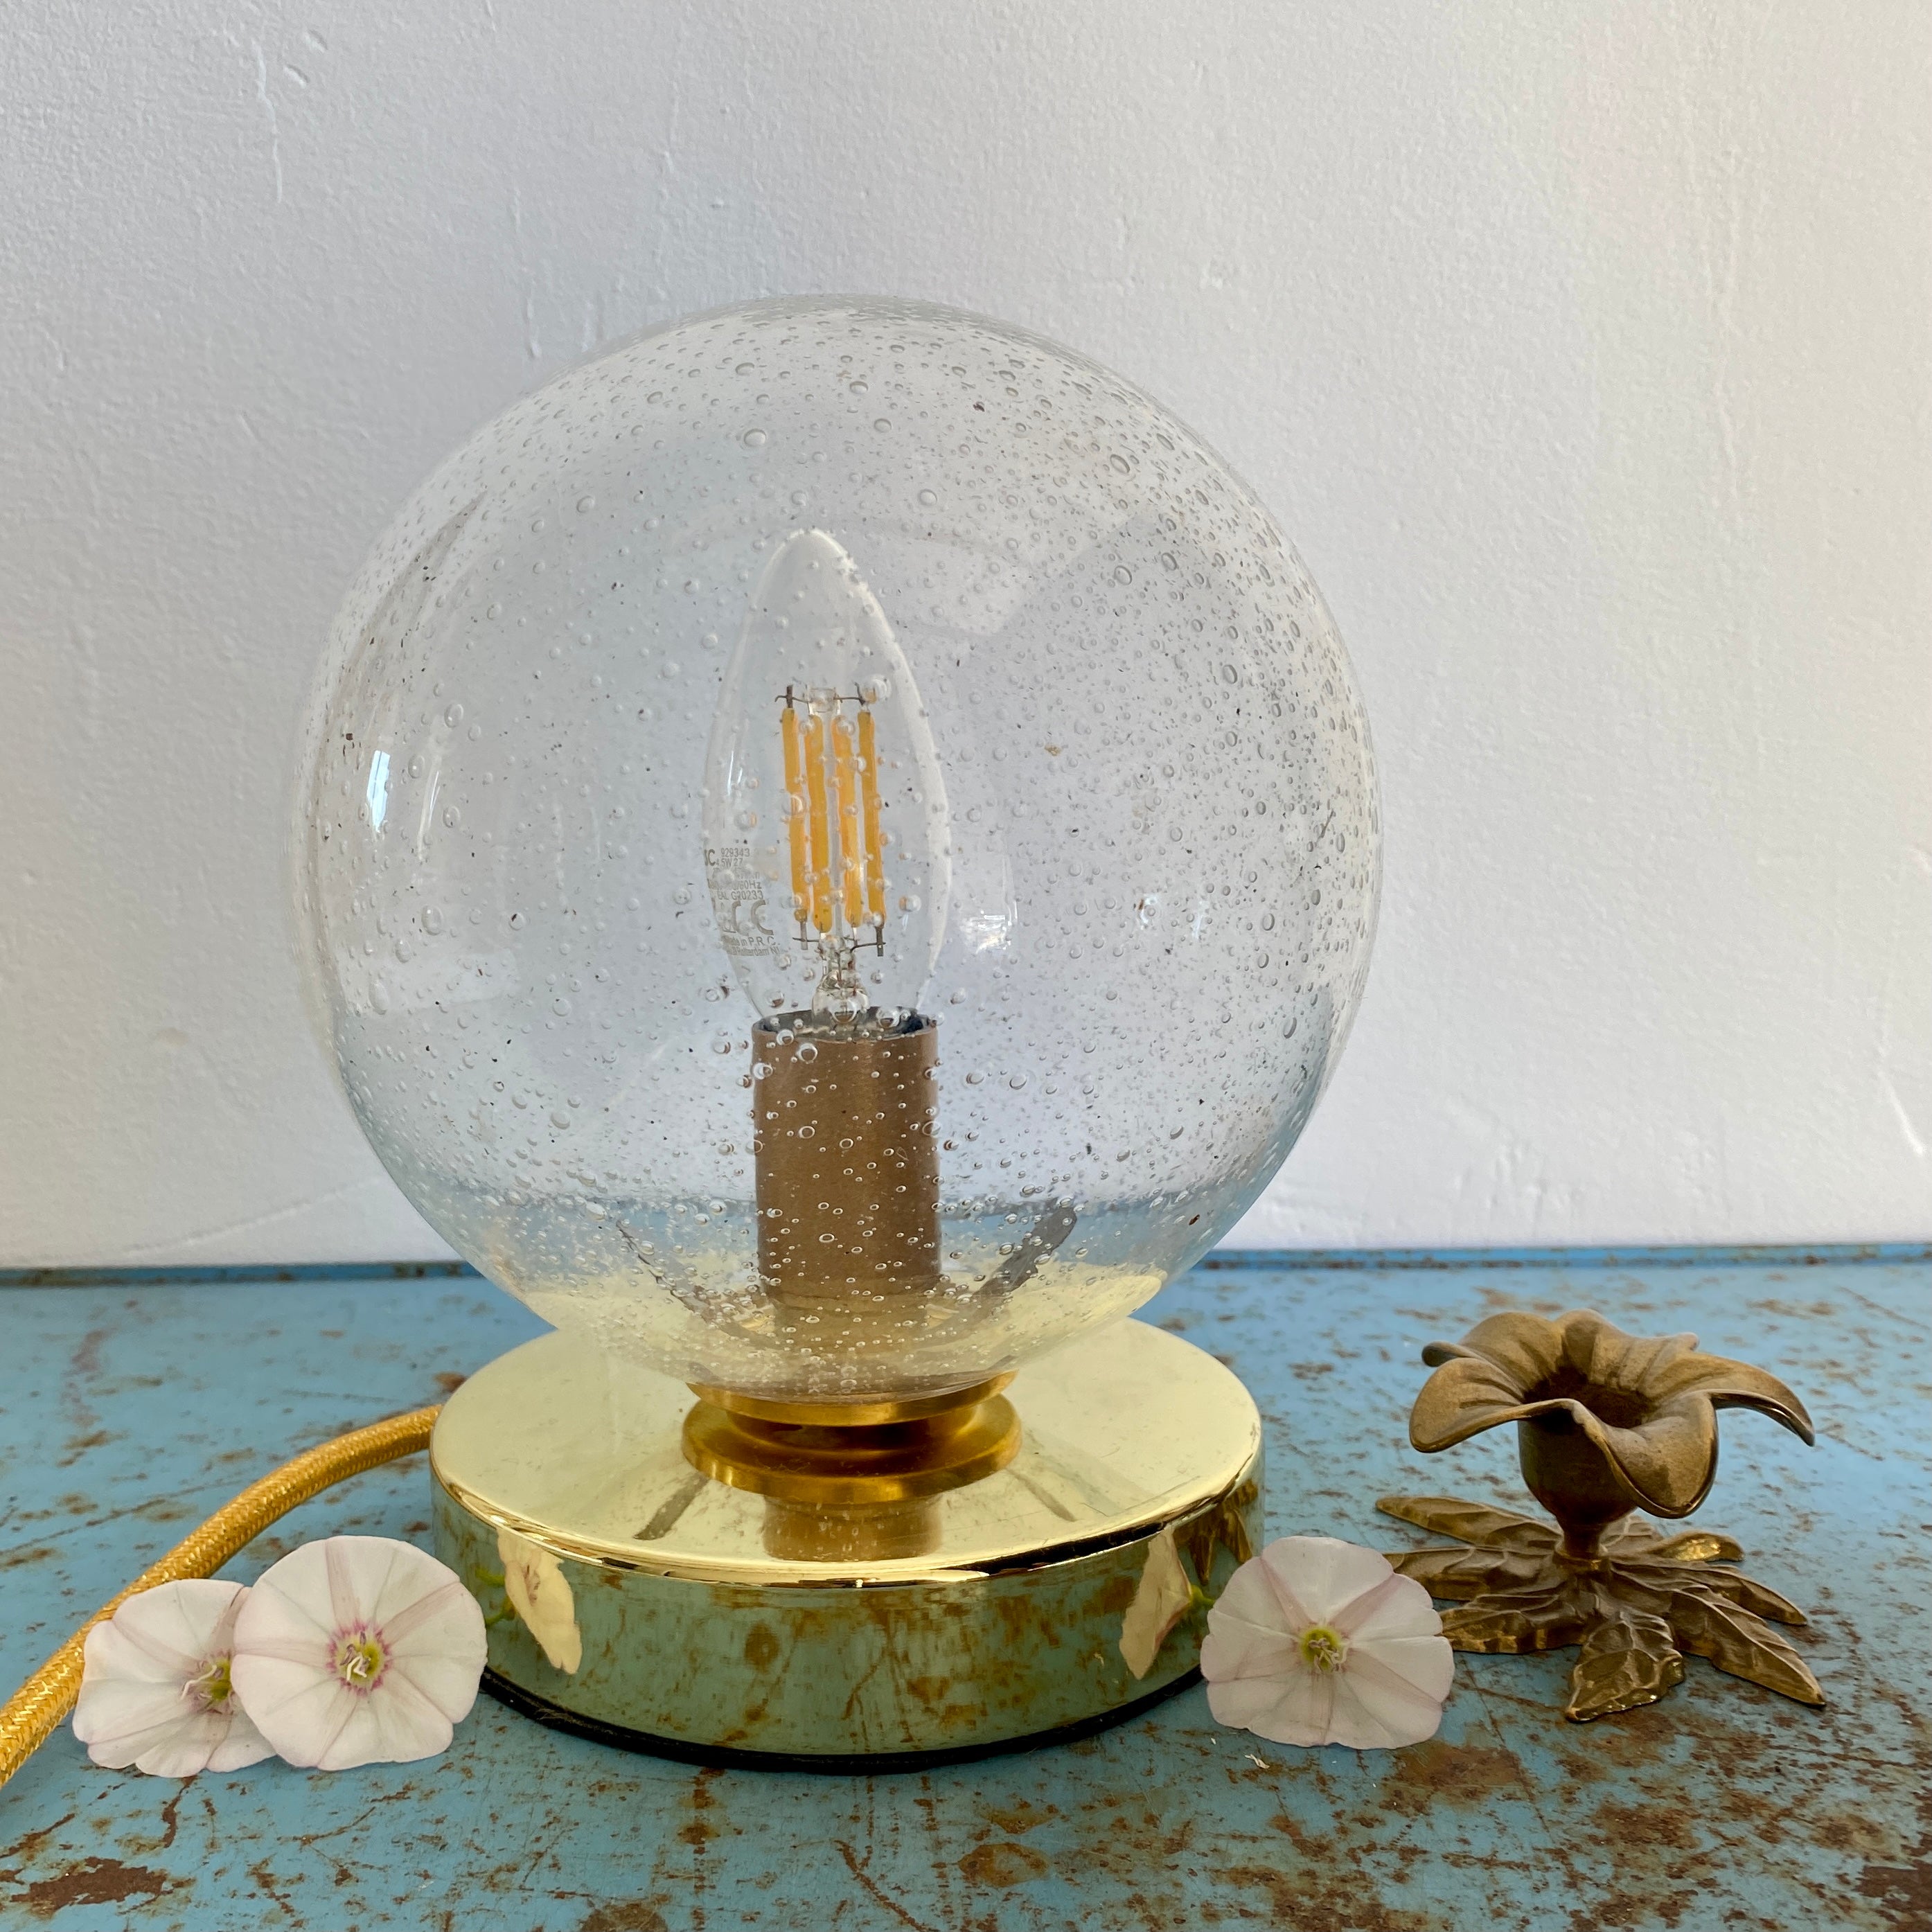 Lampe à poser Dome vintage en verre au design vintage par Nordal